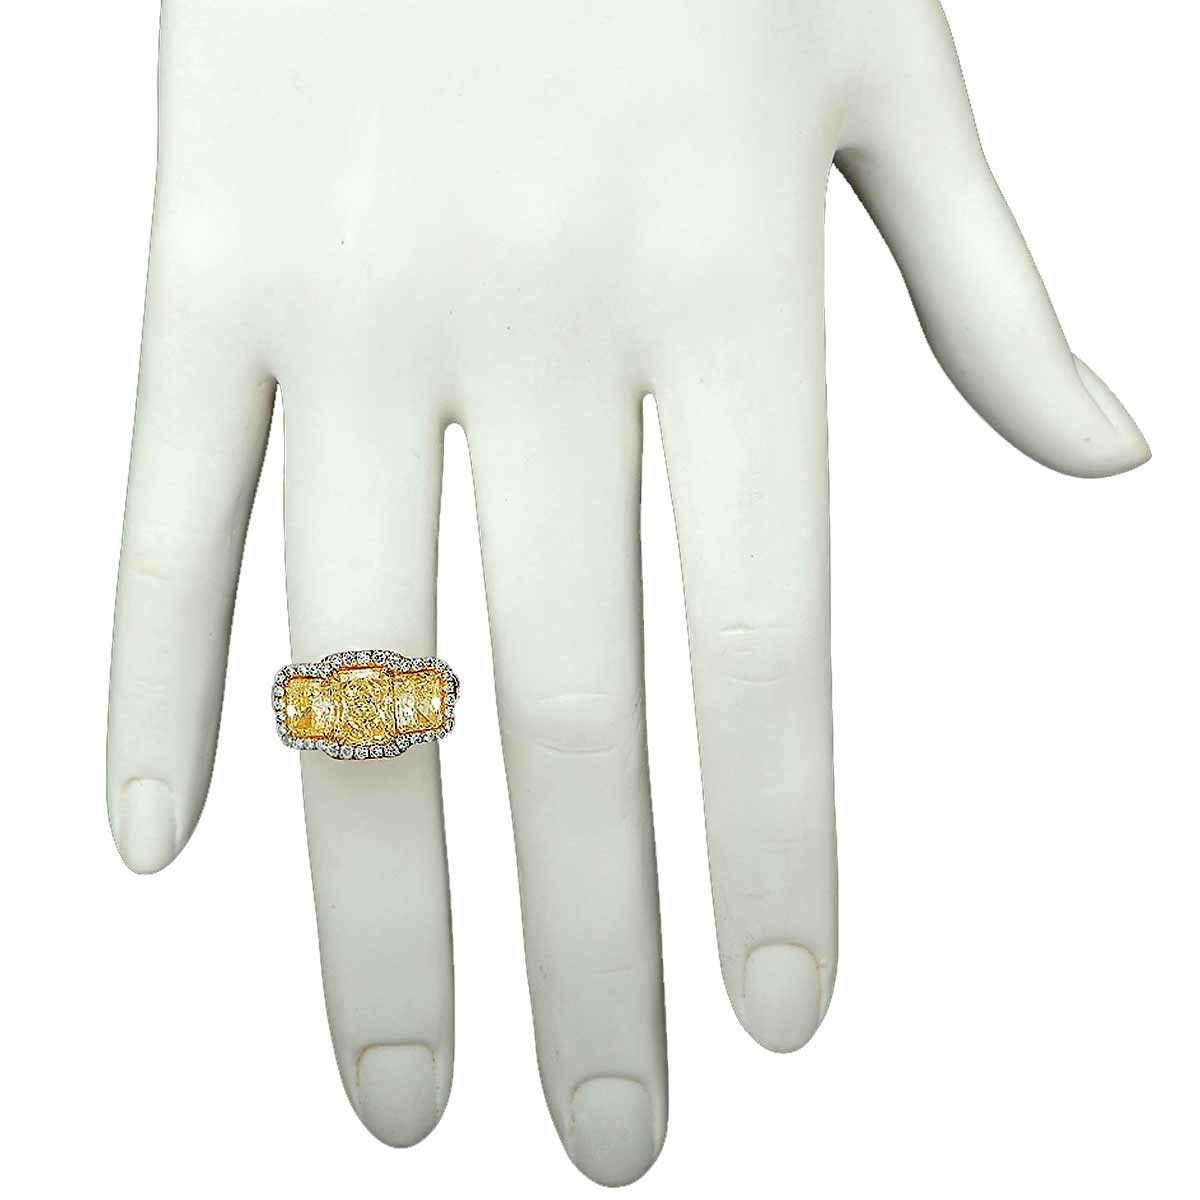 5 carat yellow diamond engagement ring